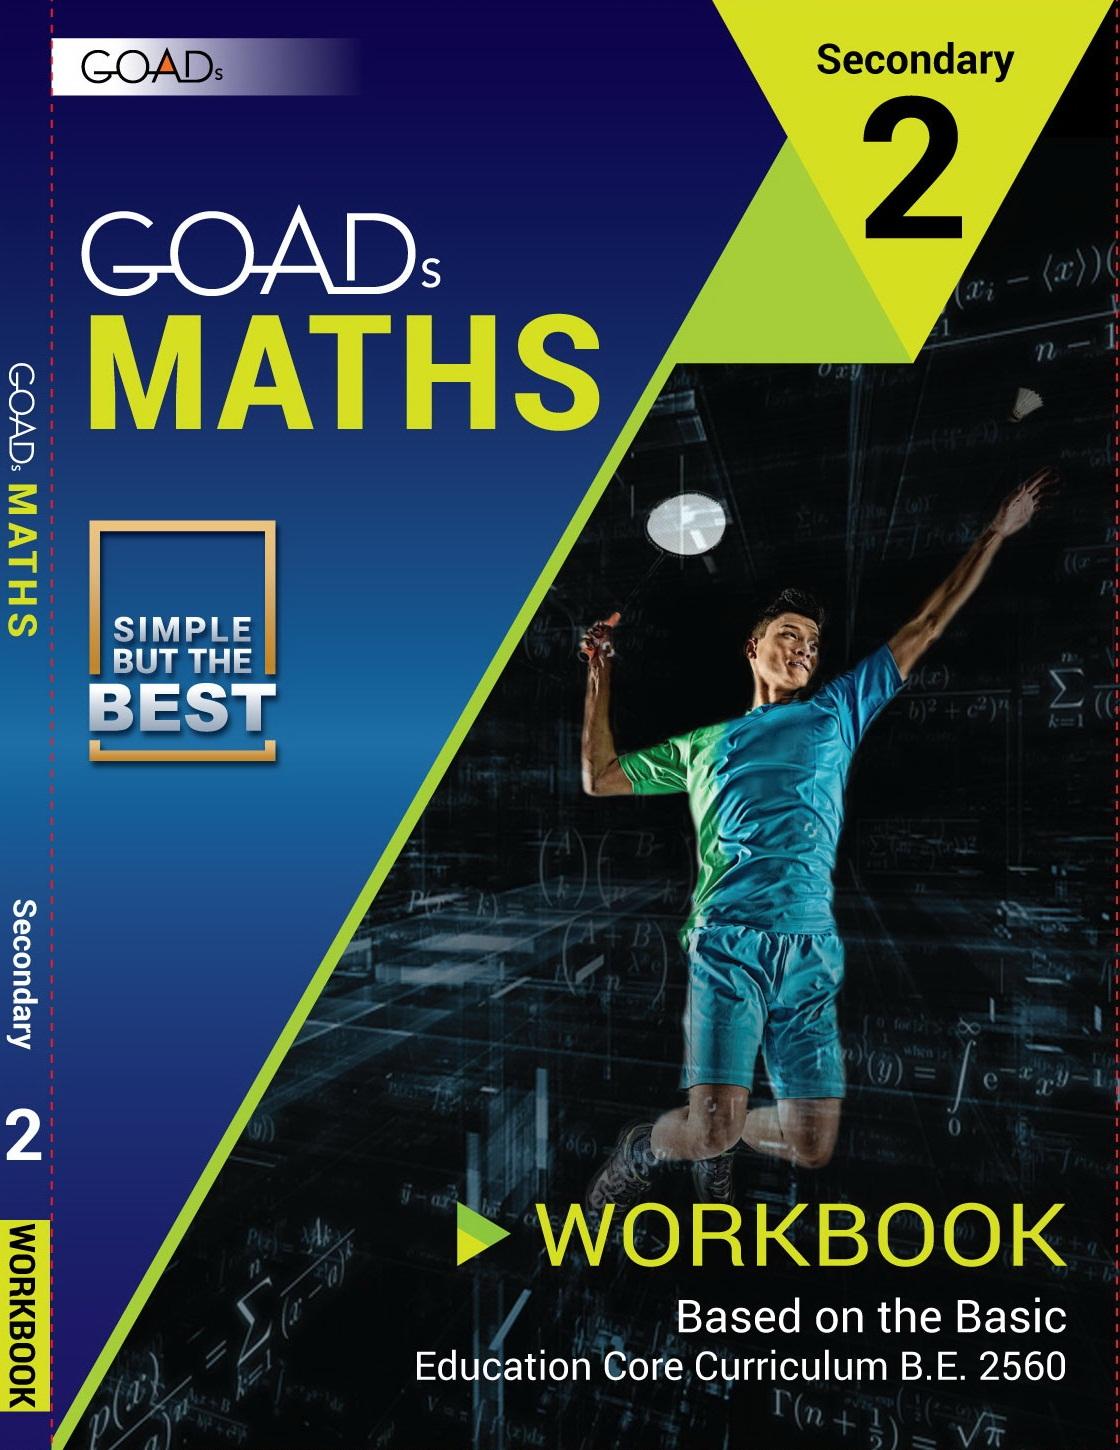 GOADs Mathematics is a series of Workbook